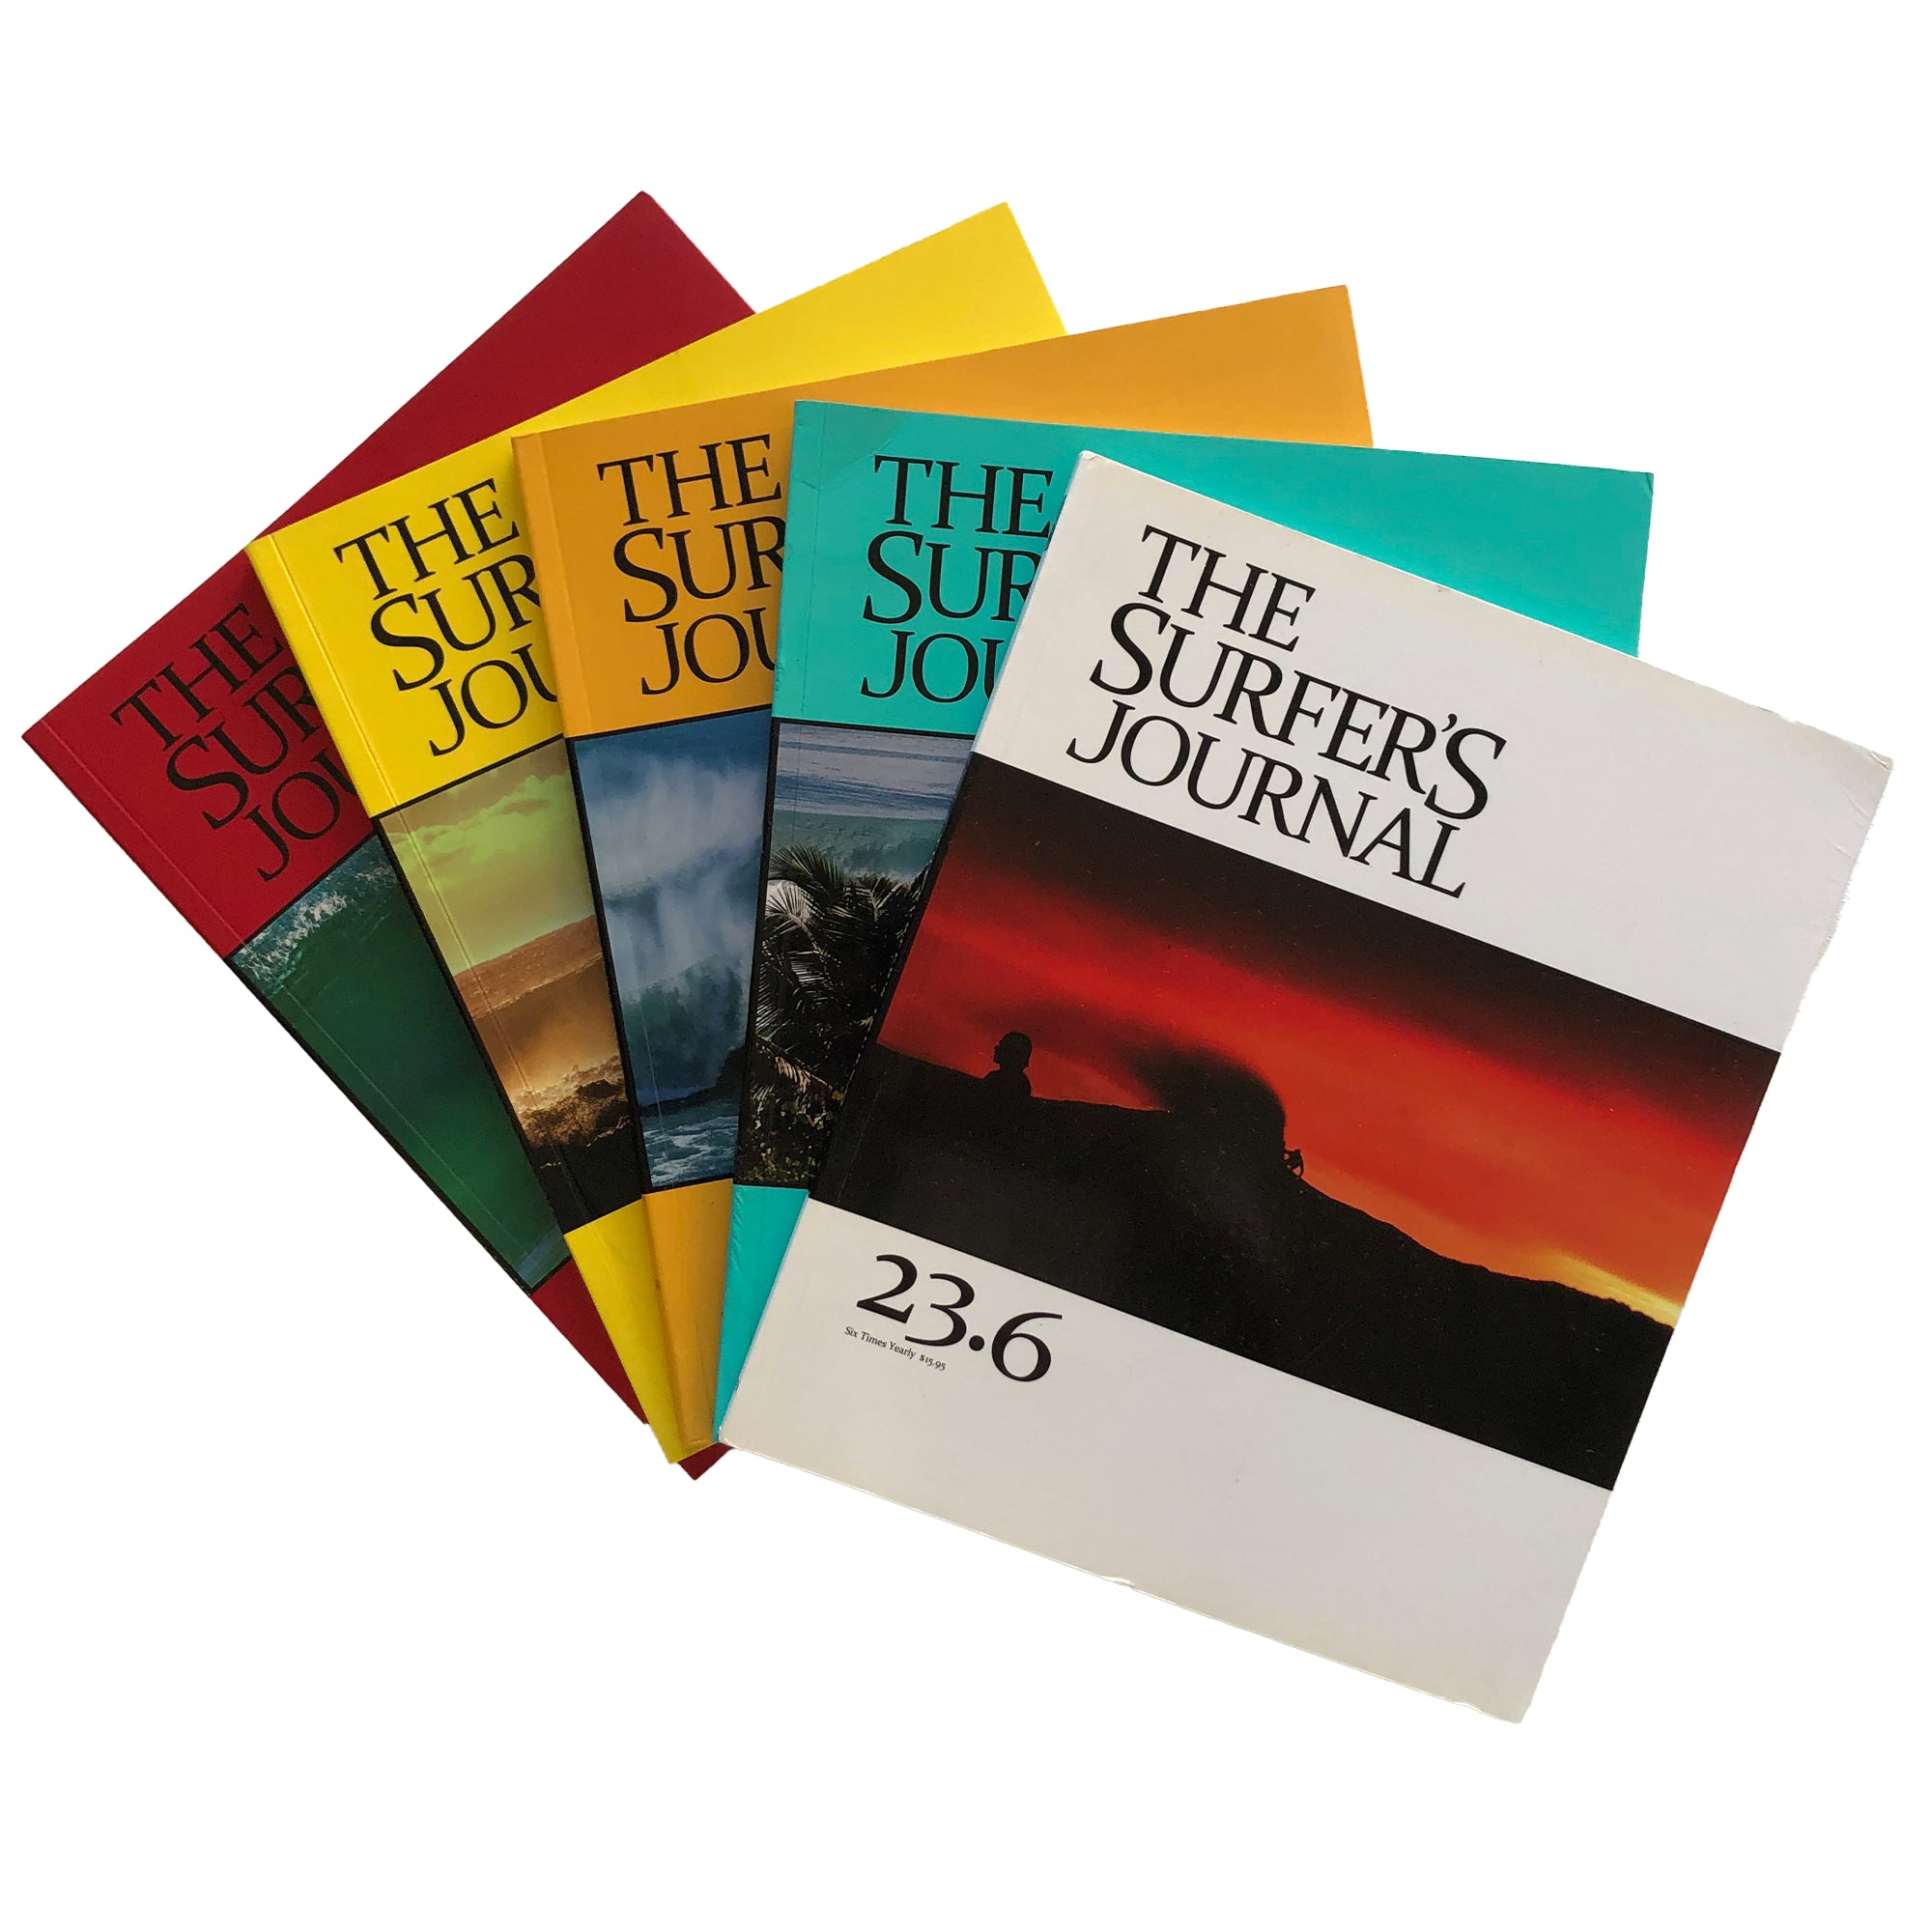 The Surfer's Journal Archives Volume 23